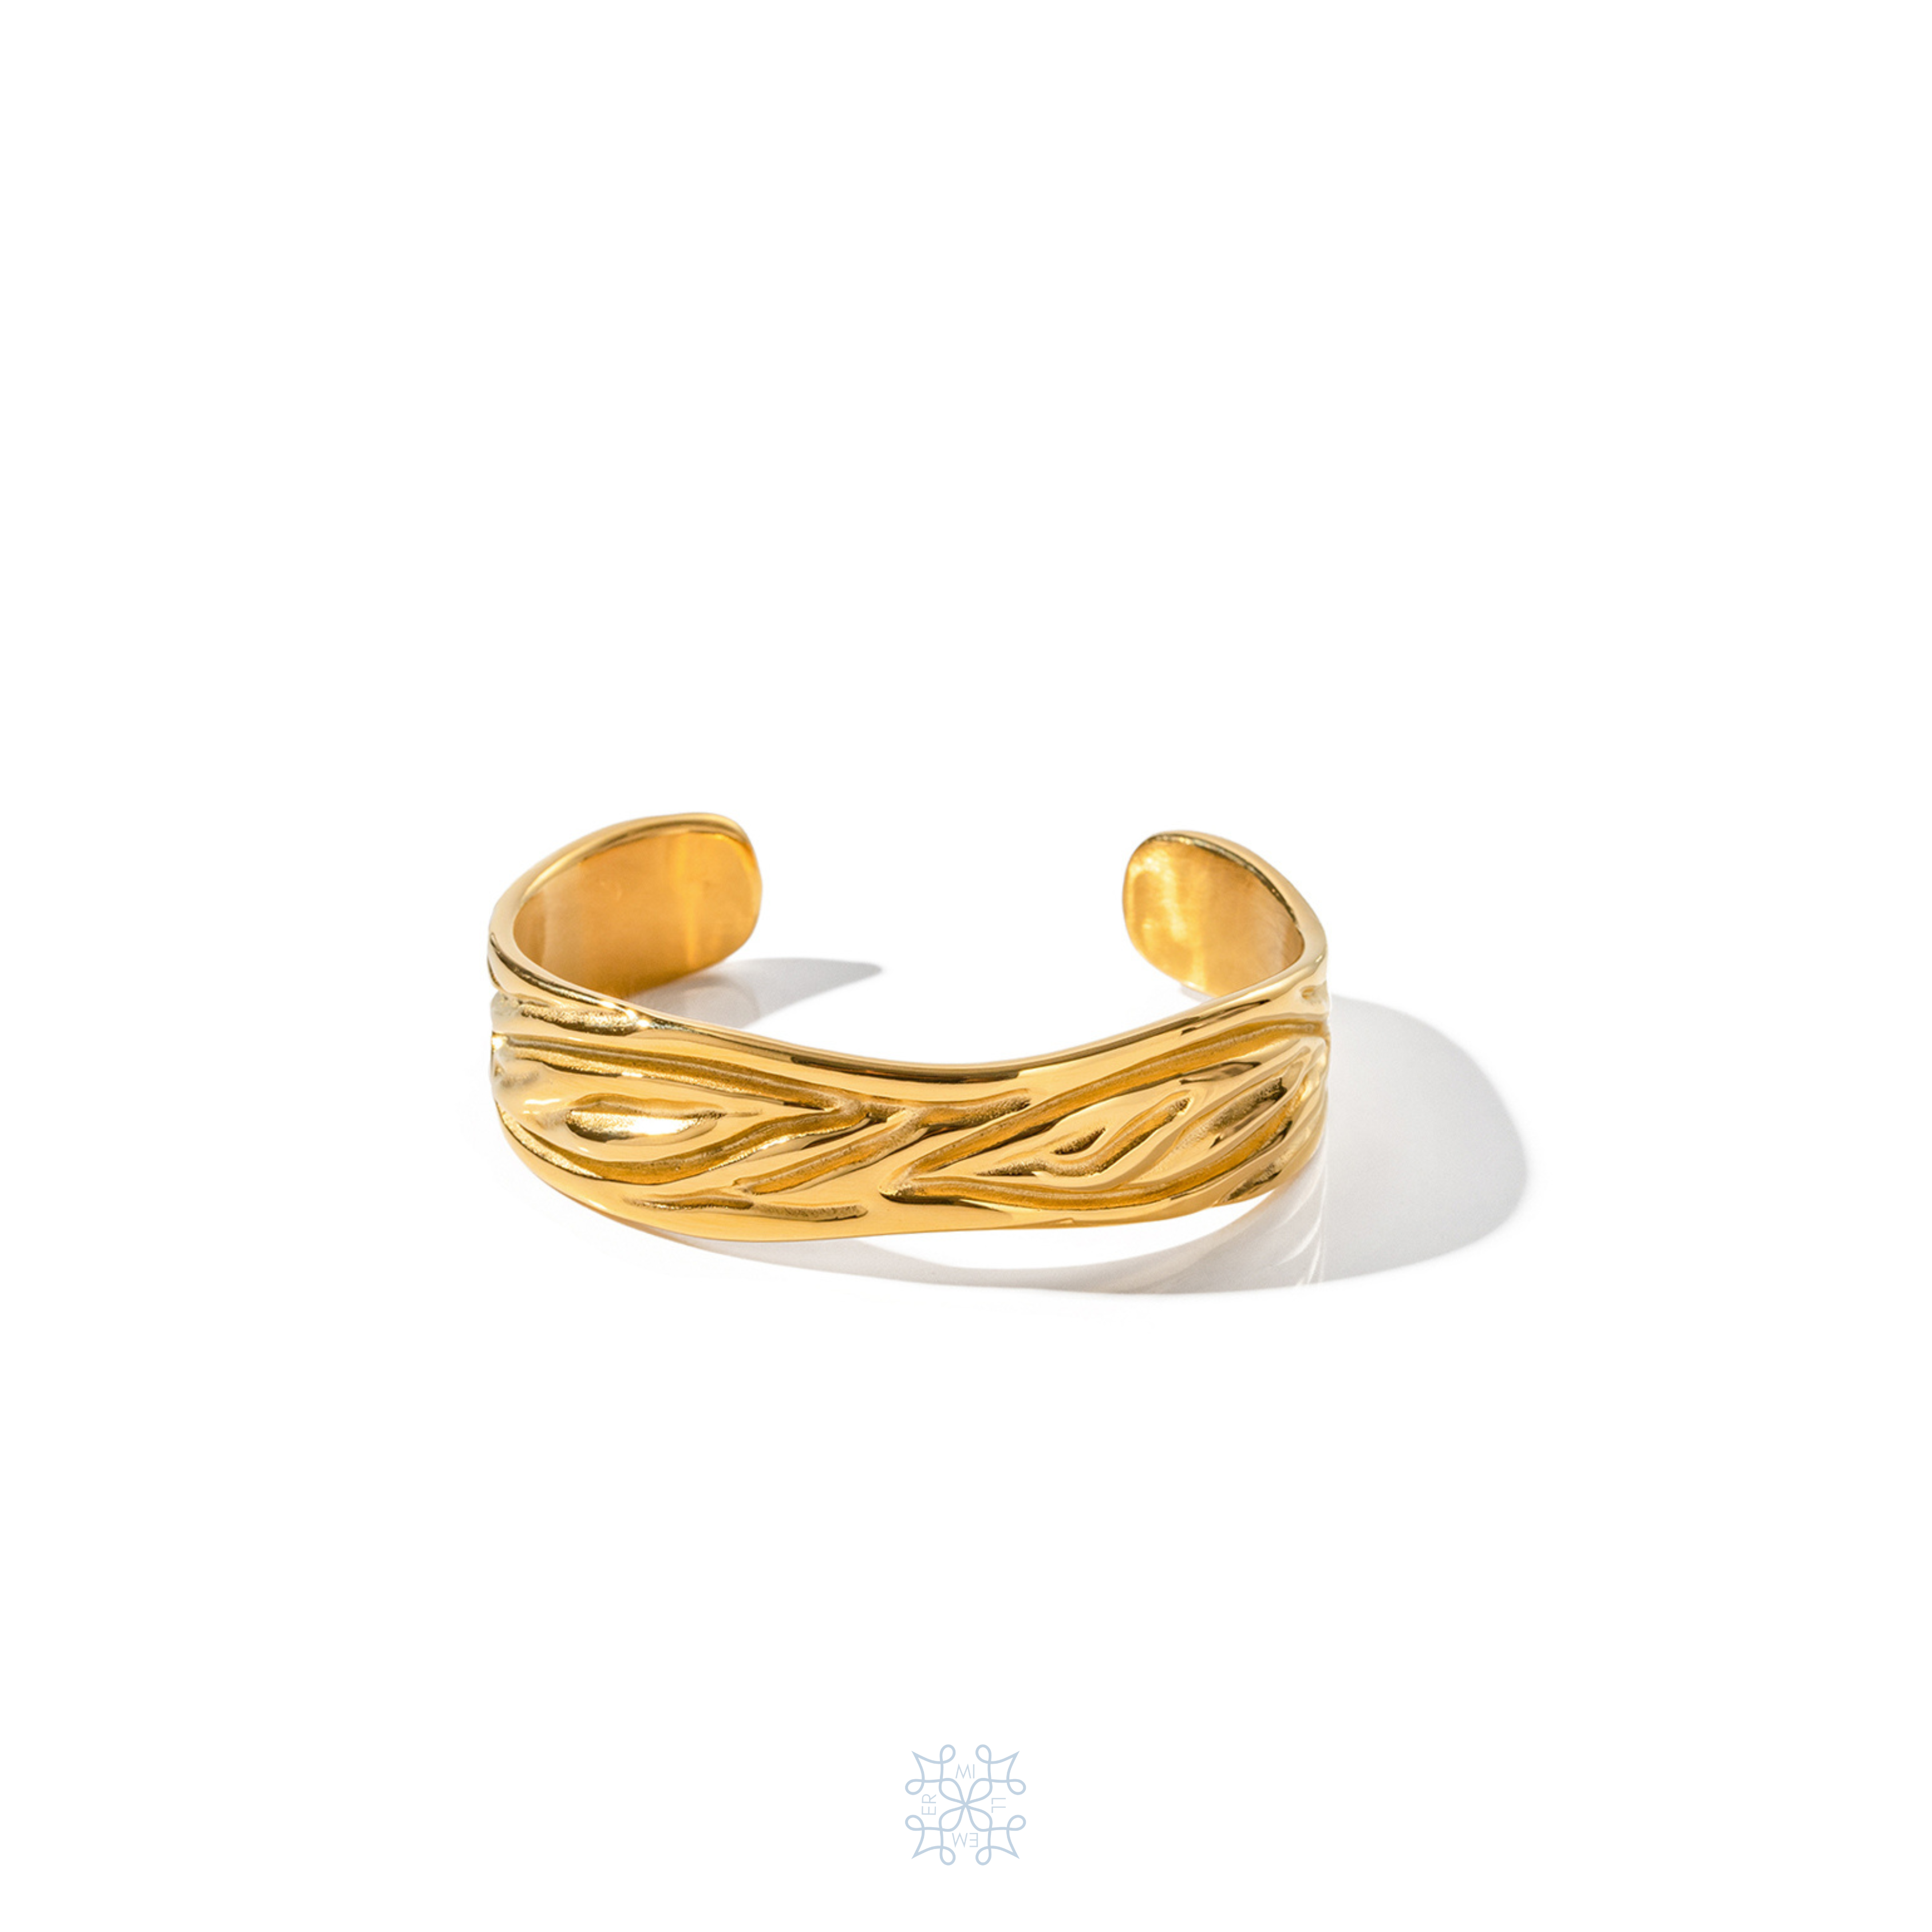 Gold Plated irregular shape cuff bracelet.